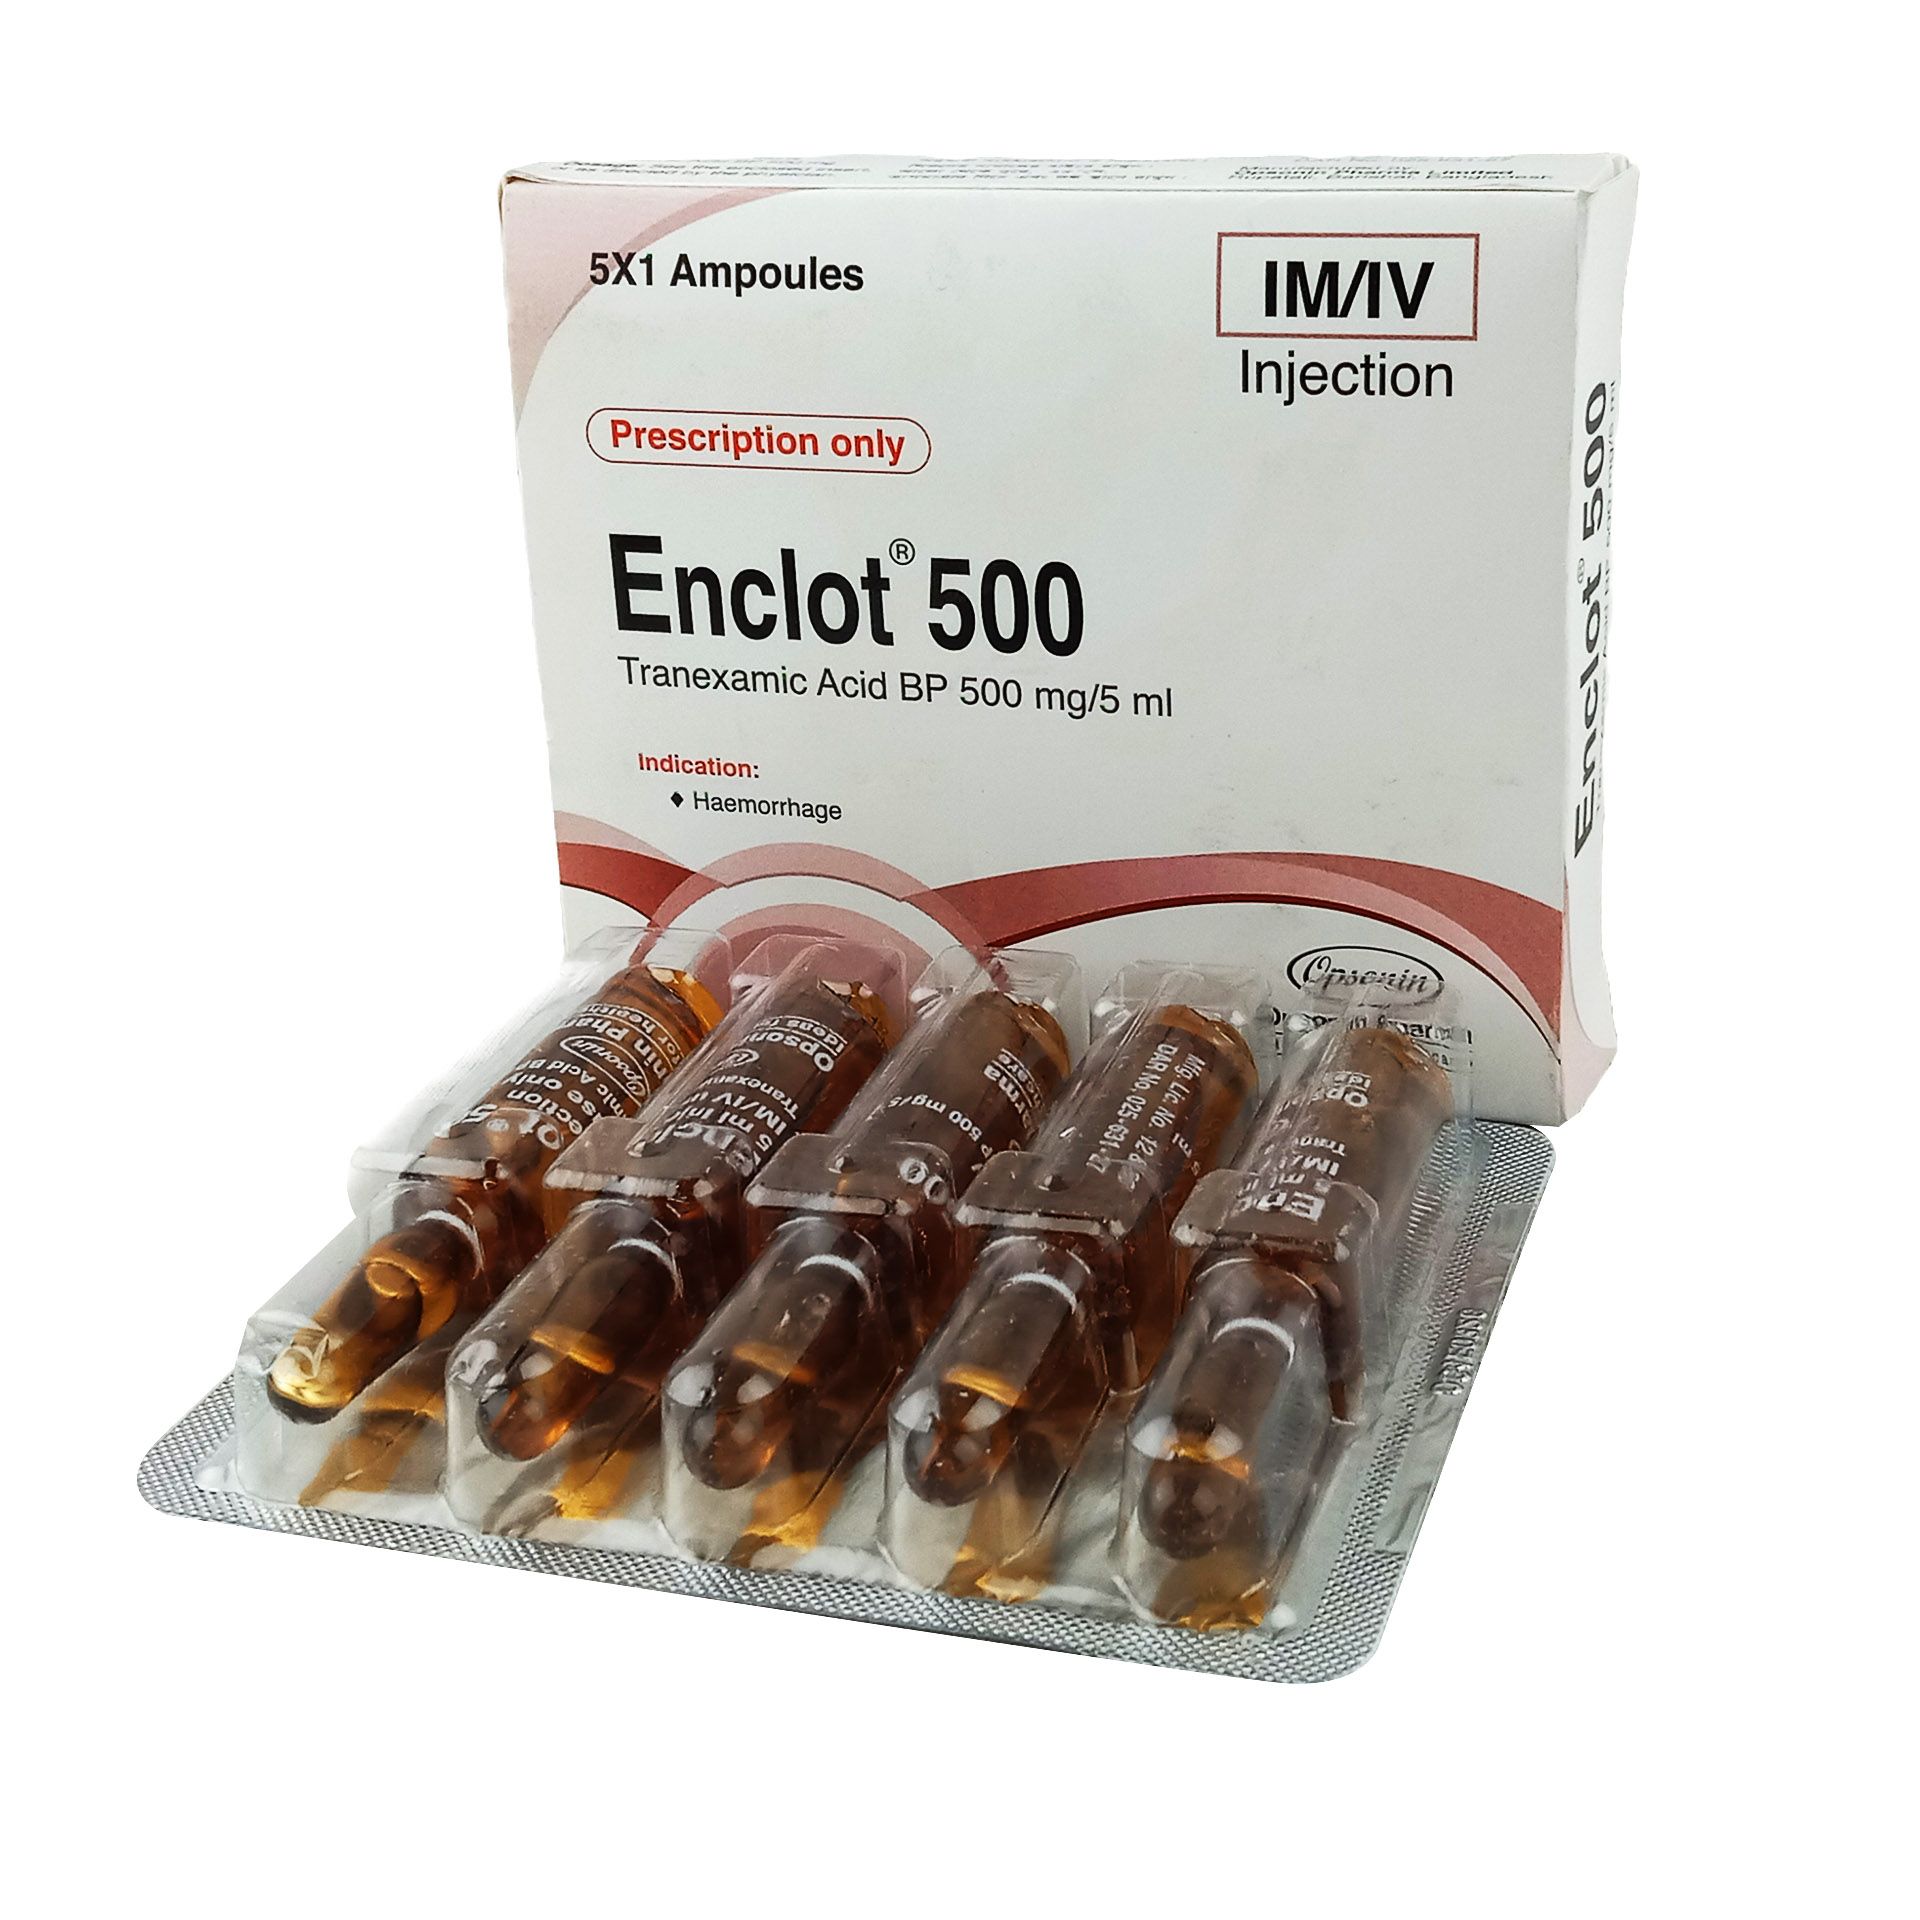 Enclot 500mg/5ml Injection